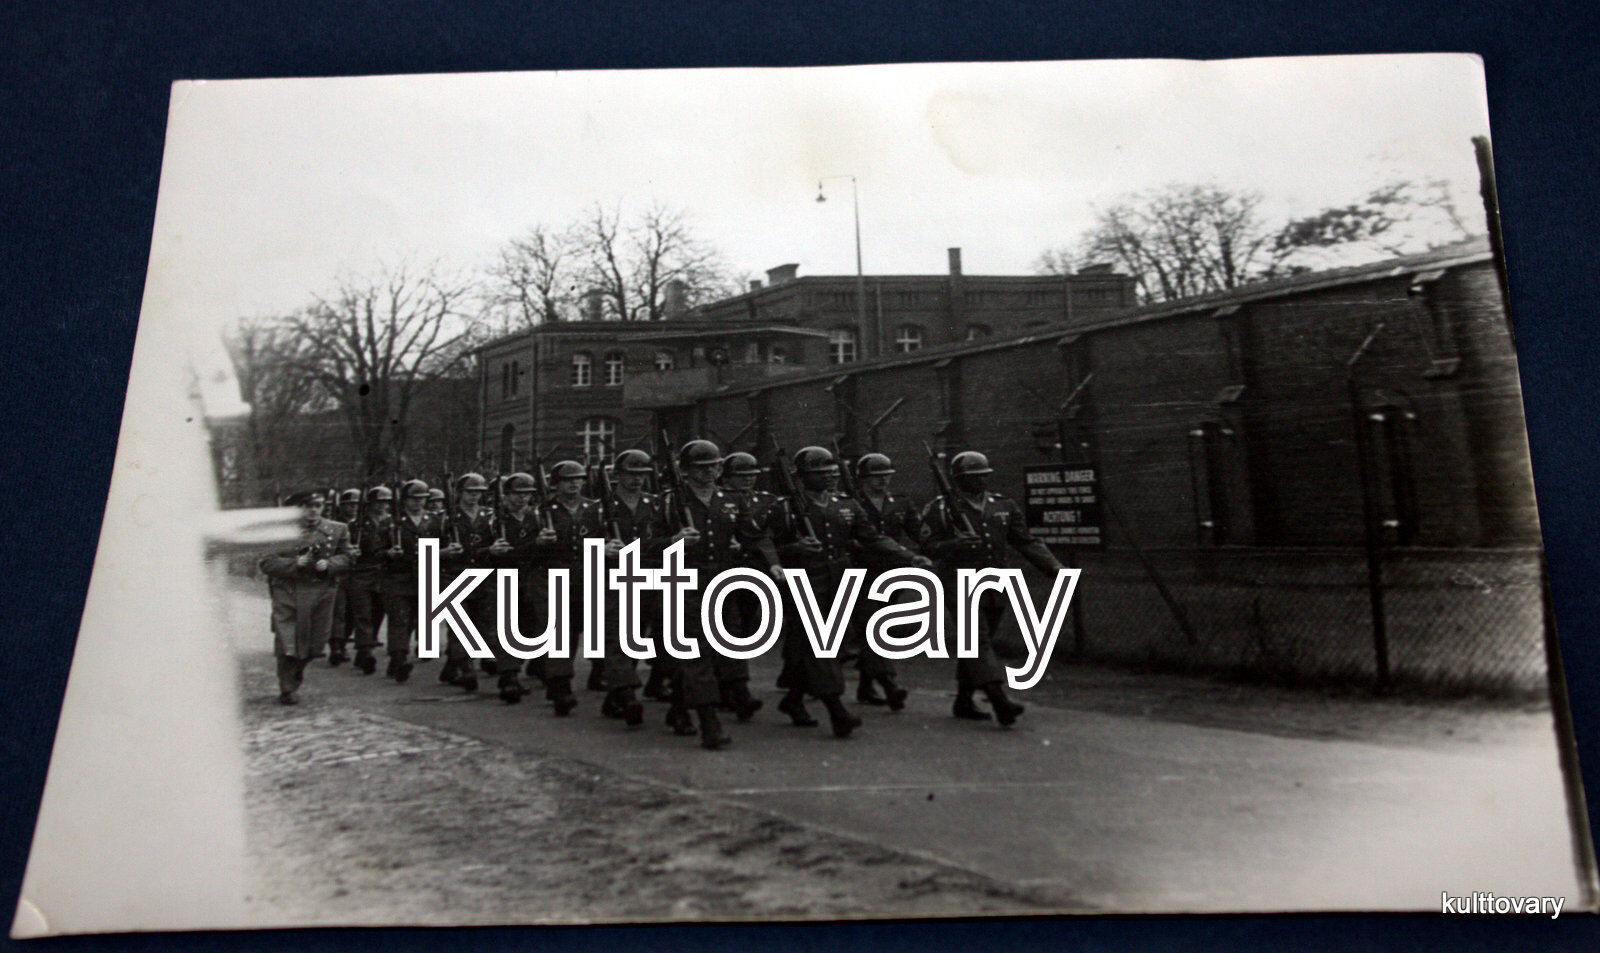 50s  ussr  usa cold war Change Guard us  army photo soviet  Spandau Prison